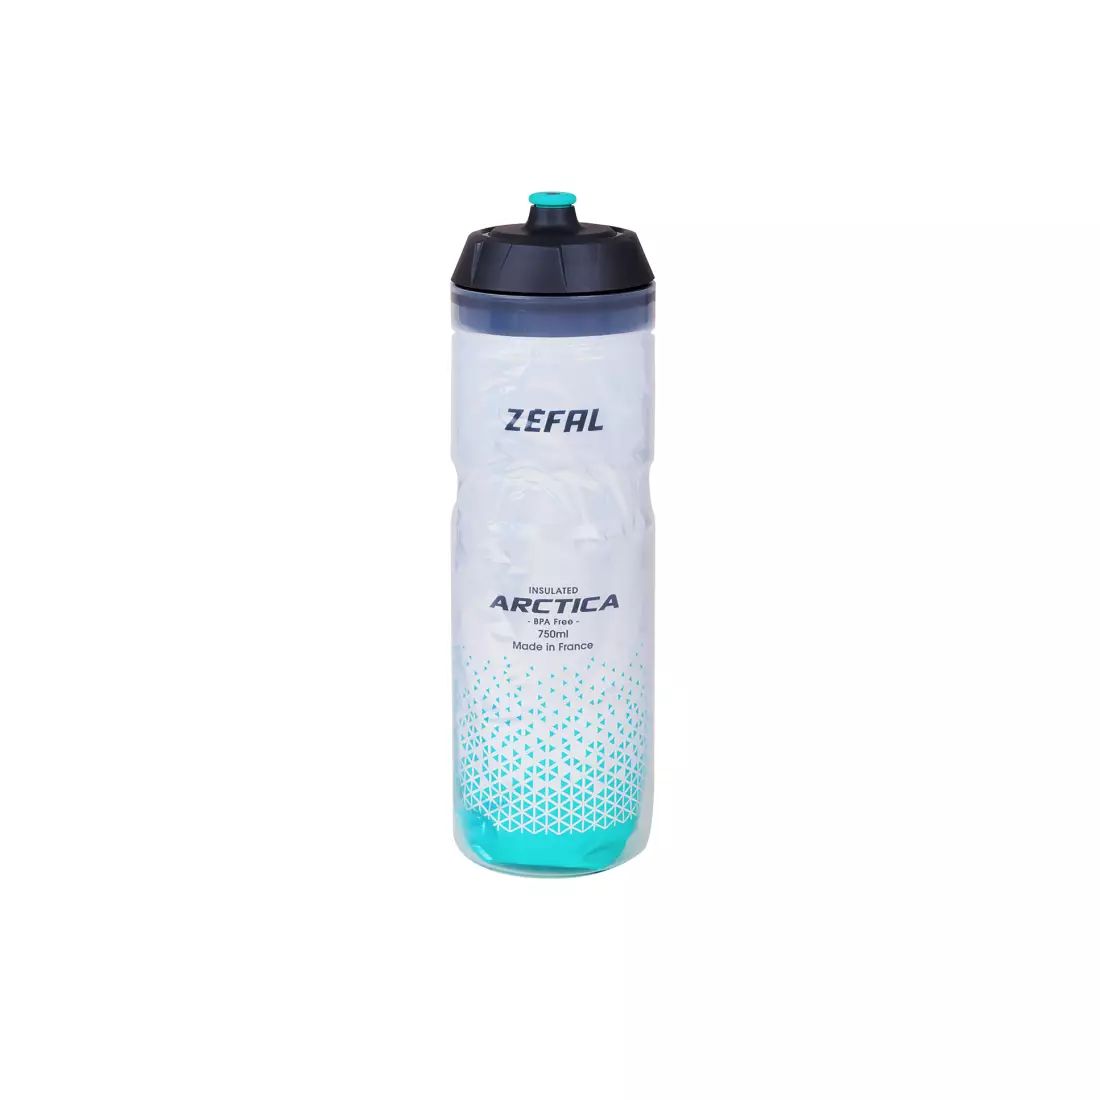 ZEFAL Fahrrad Thermalwasserflasche ARCTICA 75 silver/caraibean blue 0,75L ZF-1672